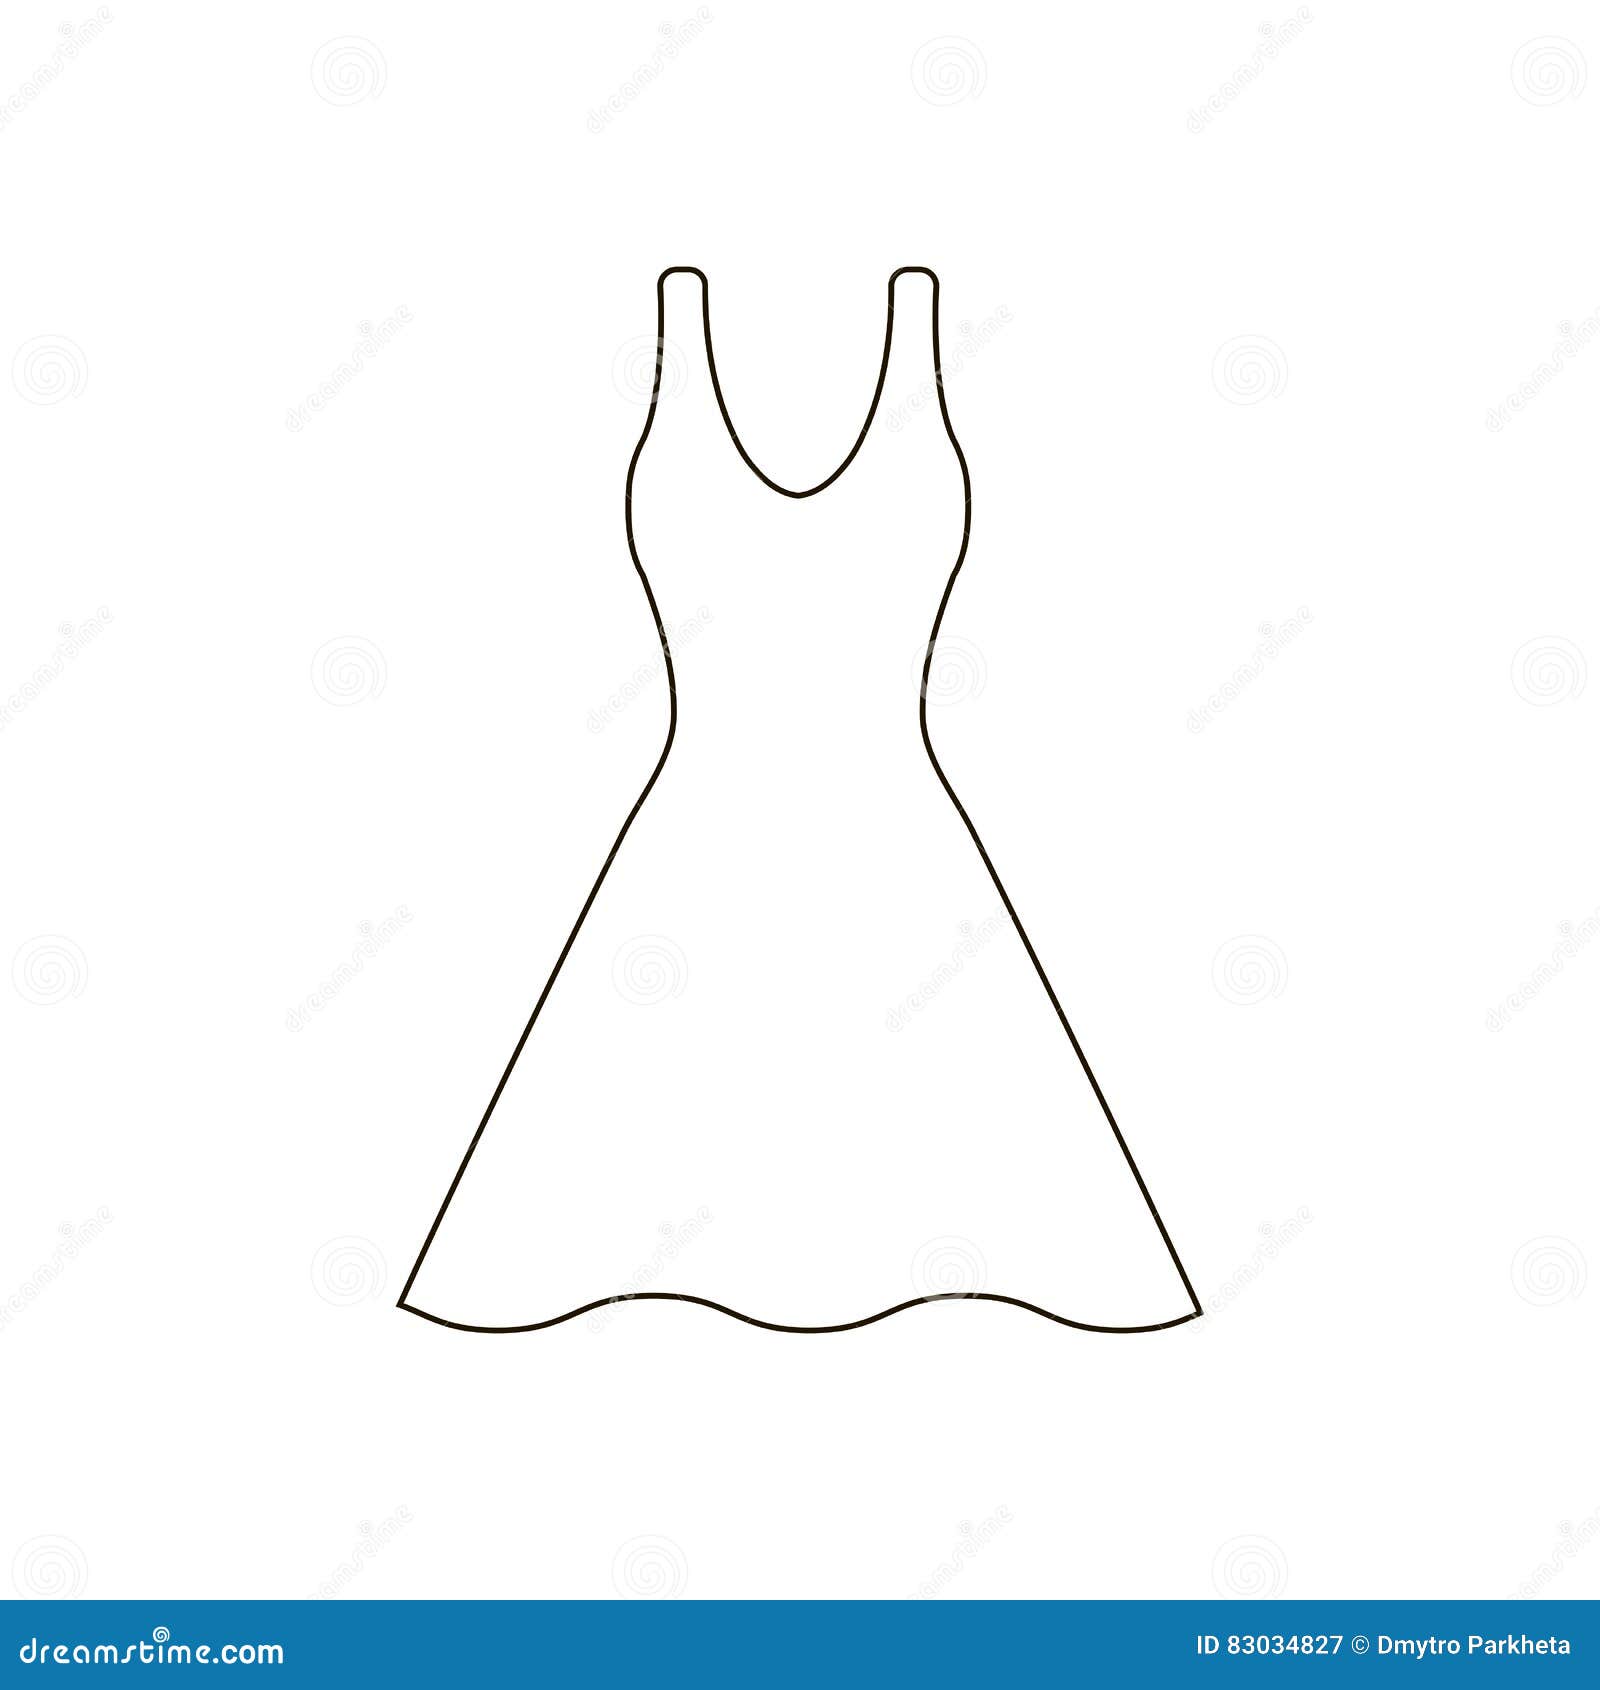 Dress vector illustration stock vector. Illustration of shape - 83034827